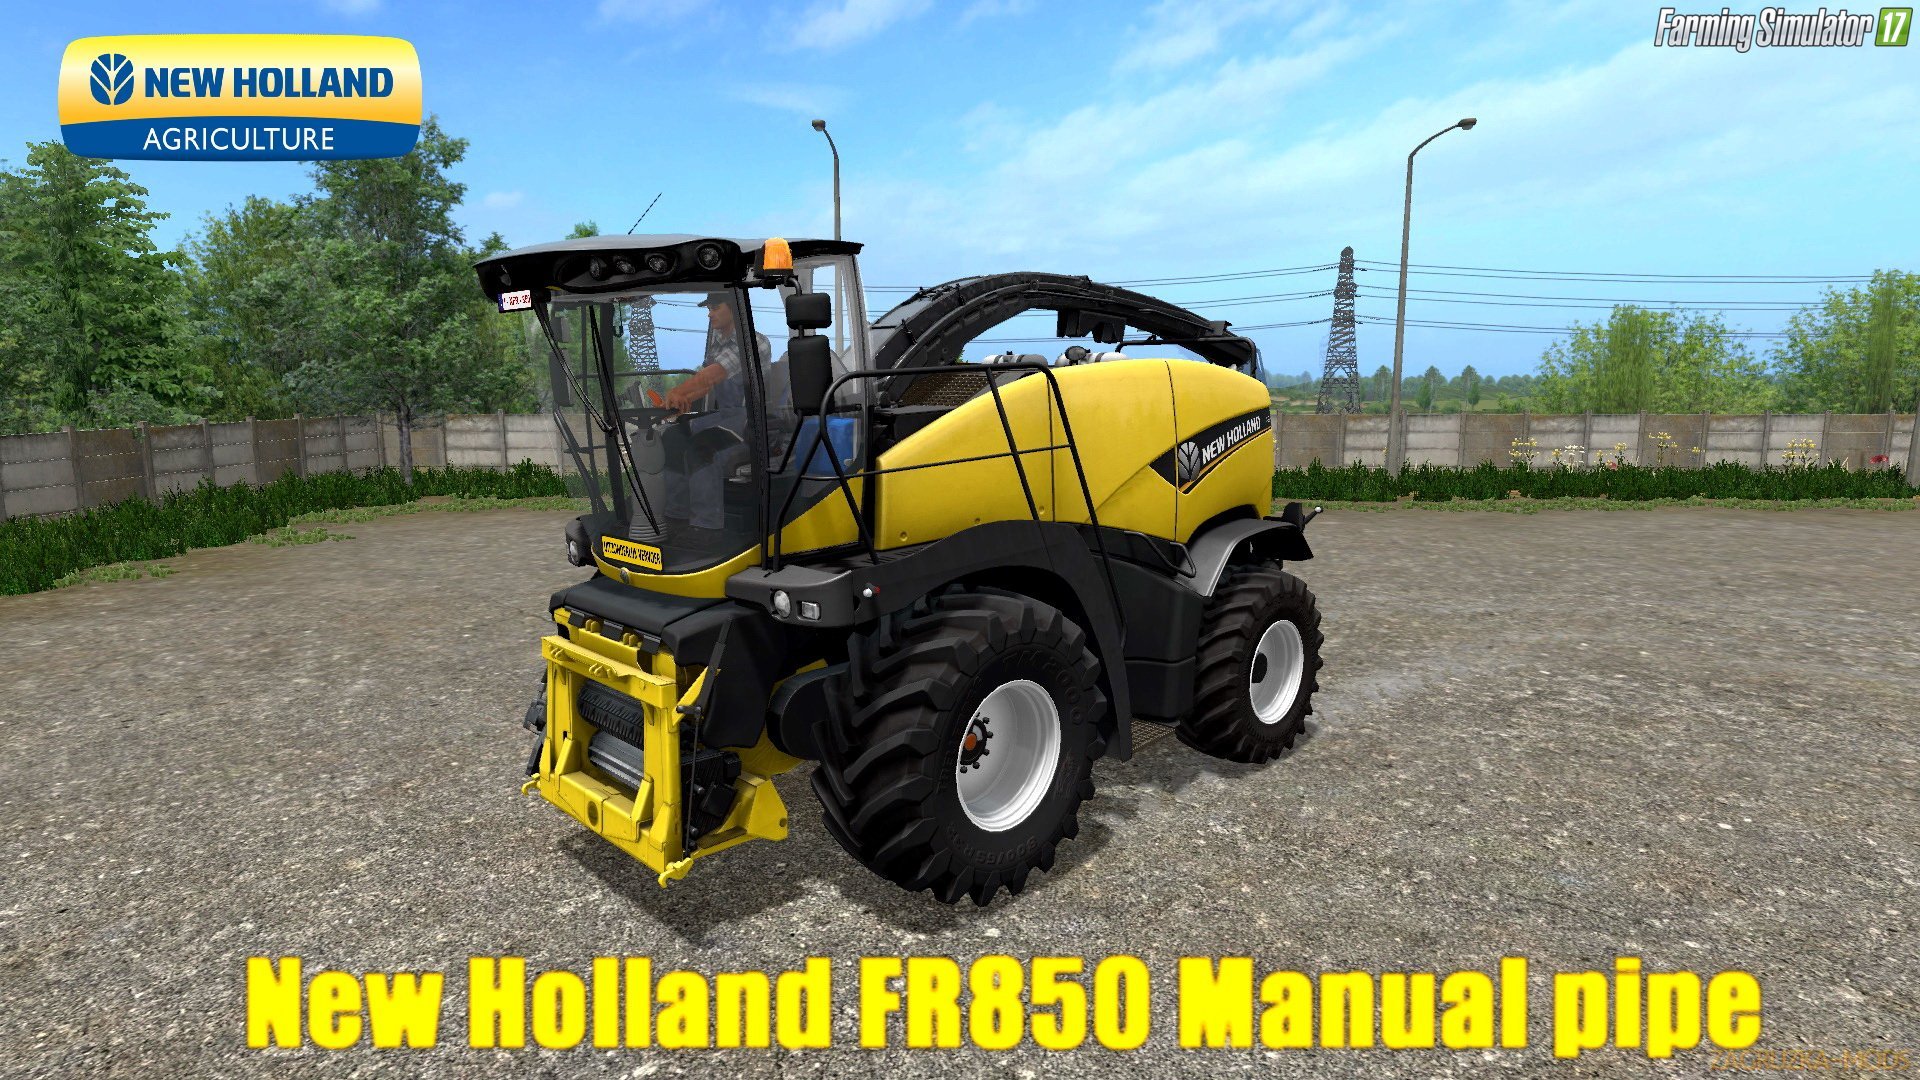 New Holland FR850 Manual pipe v1.0 for FS 17